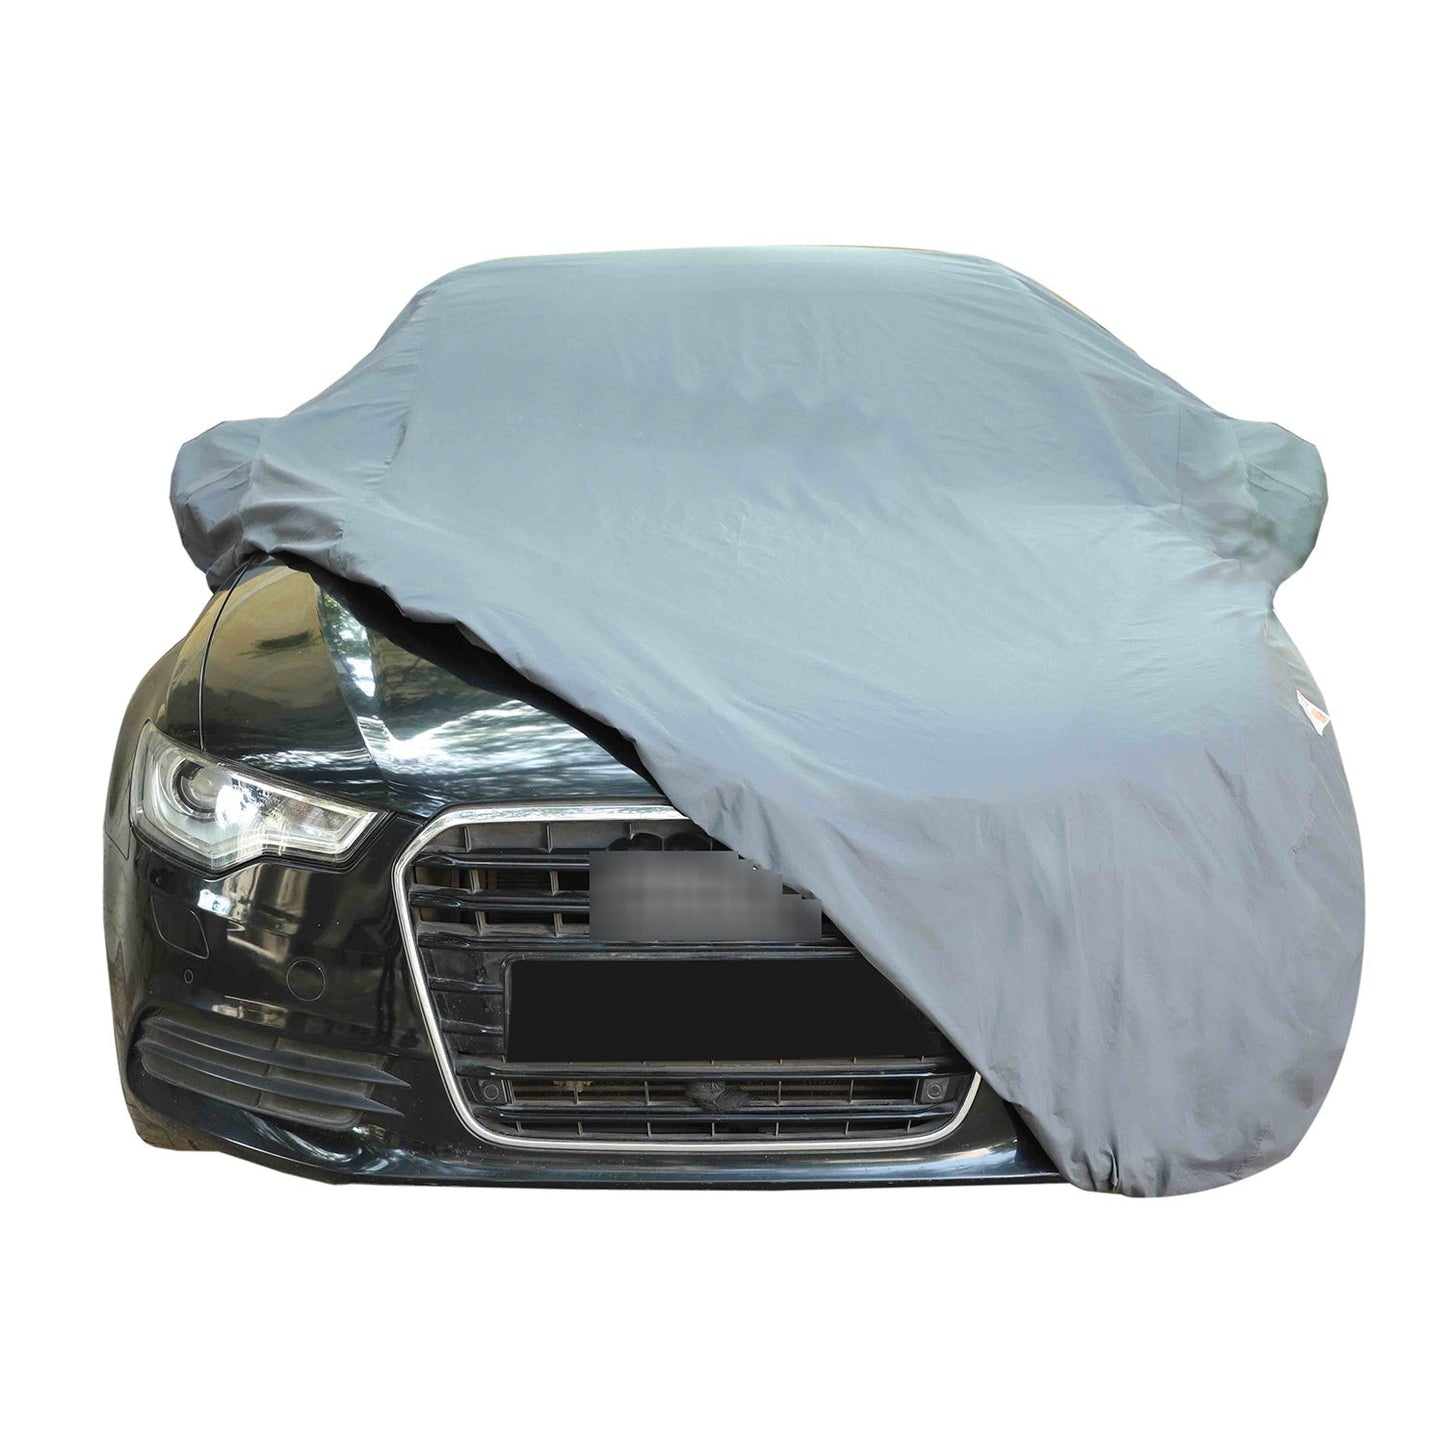 Oshotto Dark Grey 100% Anti Reflective, dustproof and Water Proof Car Body Cover with Mirror Pockets For Maruti Suzuki Ertiga 2012-2018